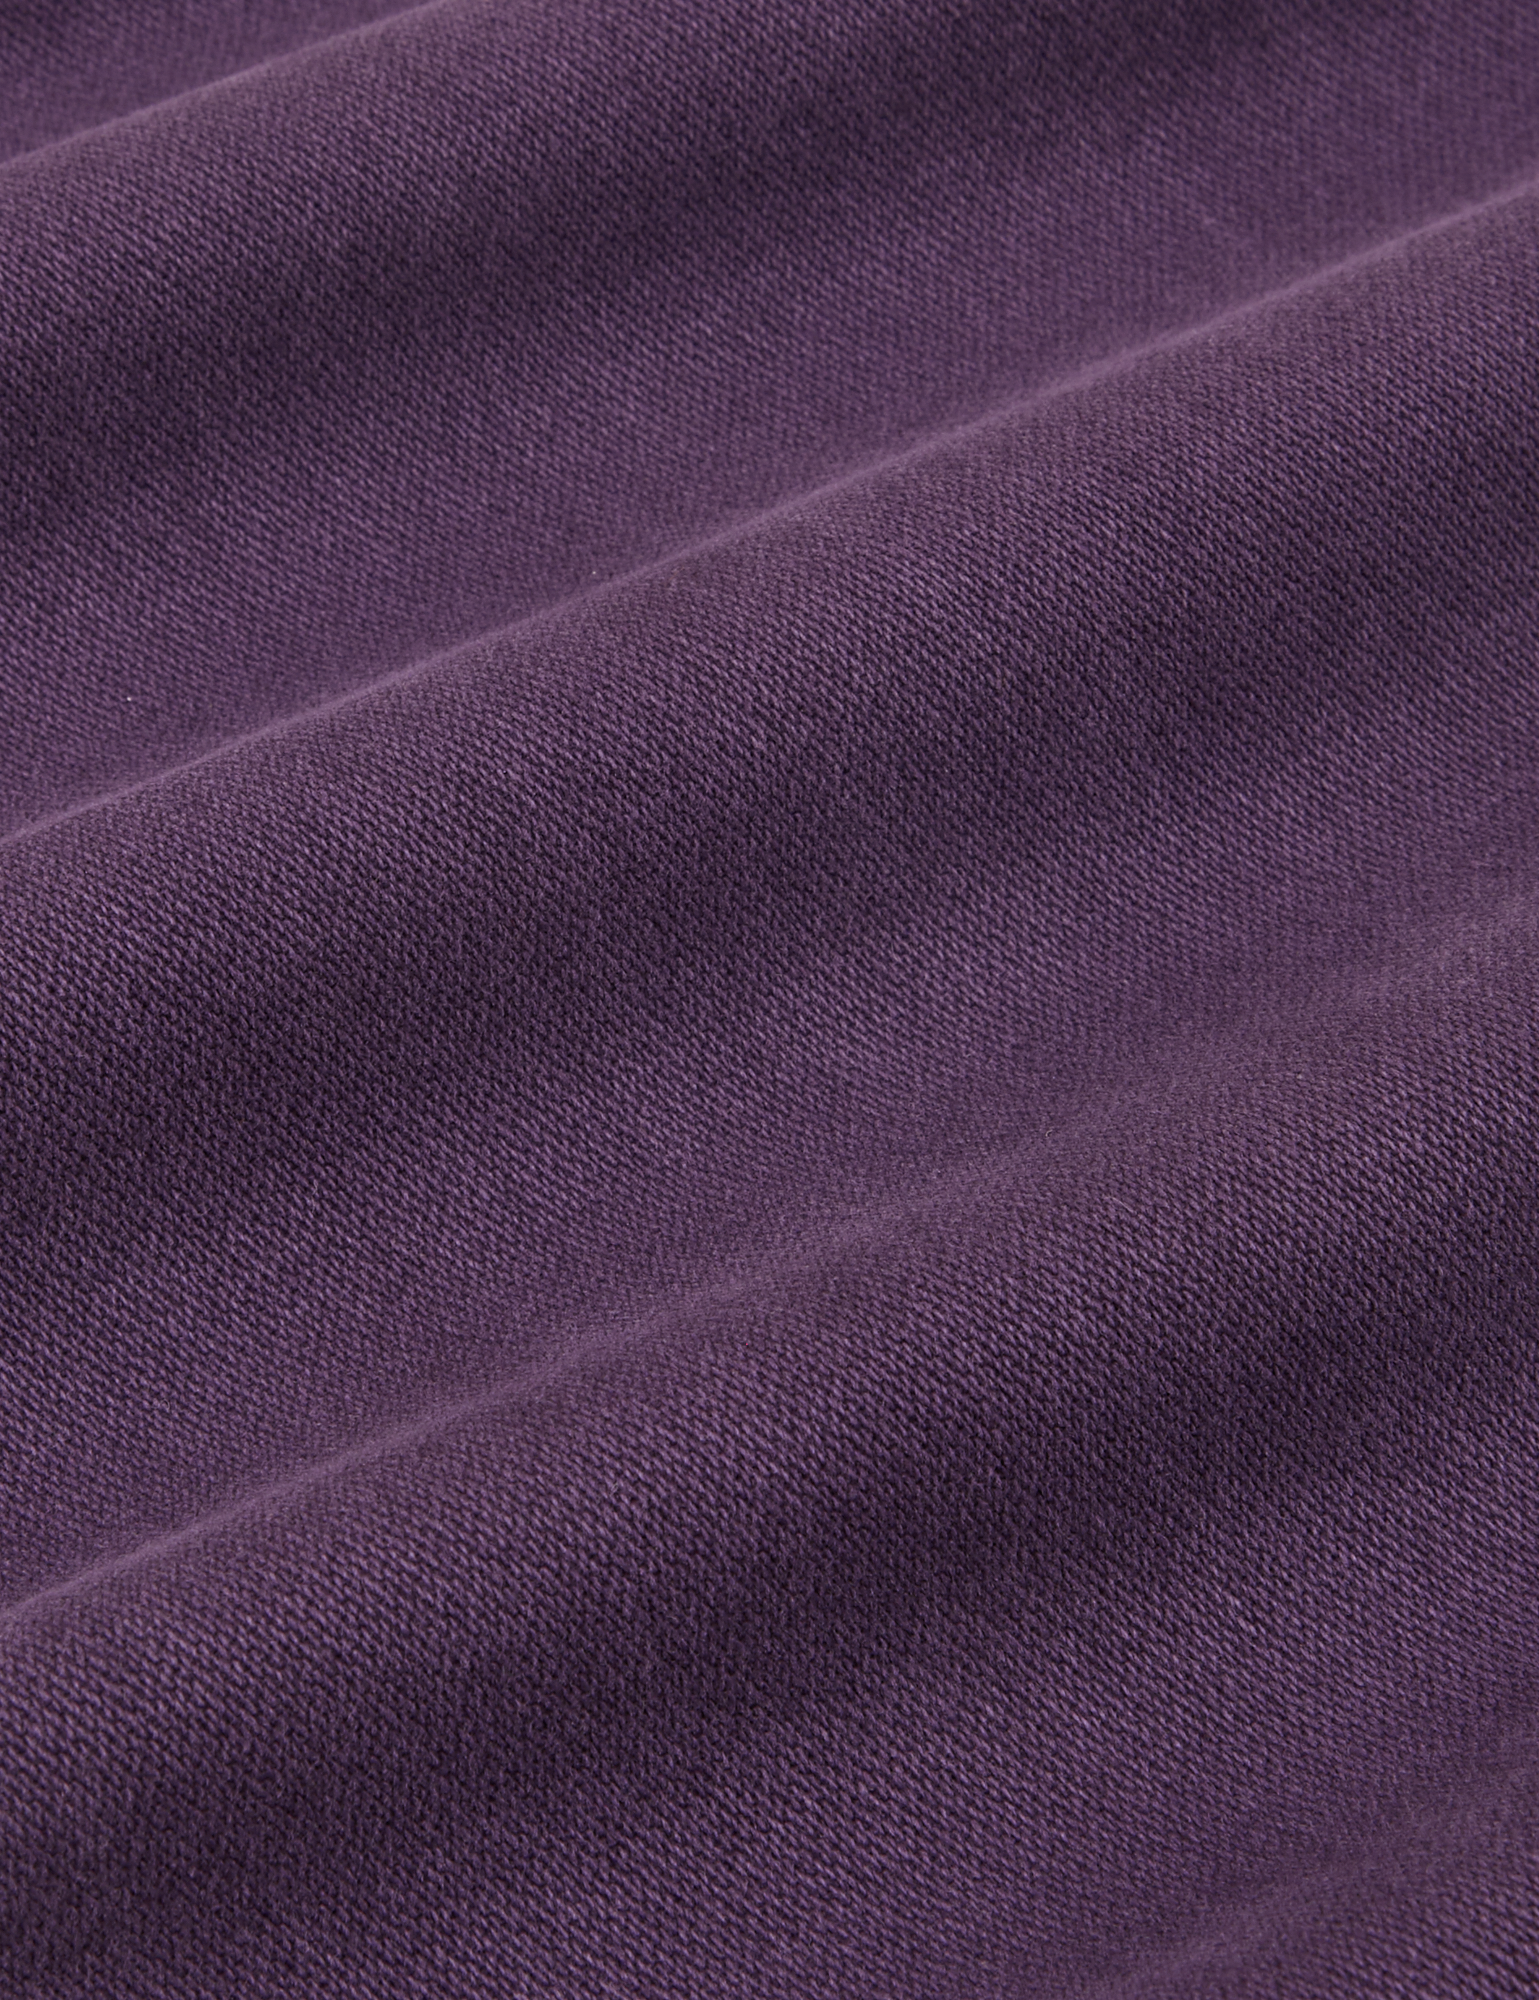 Original Overalls in Mono Nebula Purple fabric detail close up